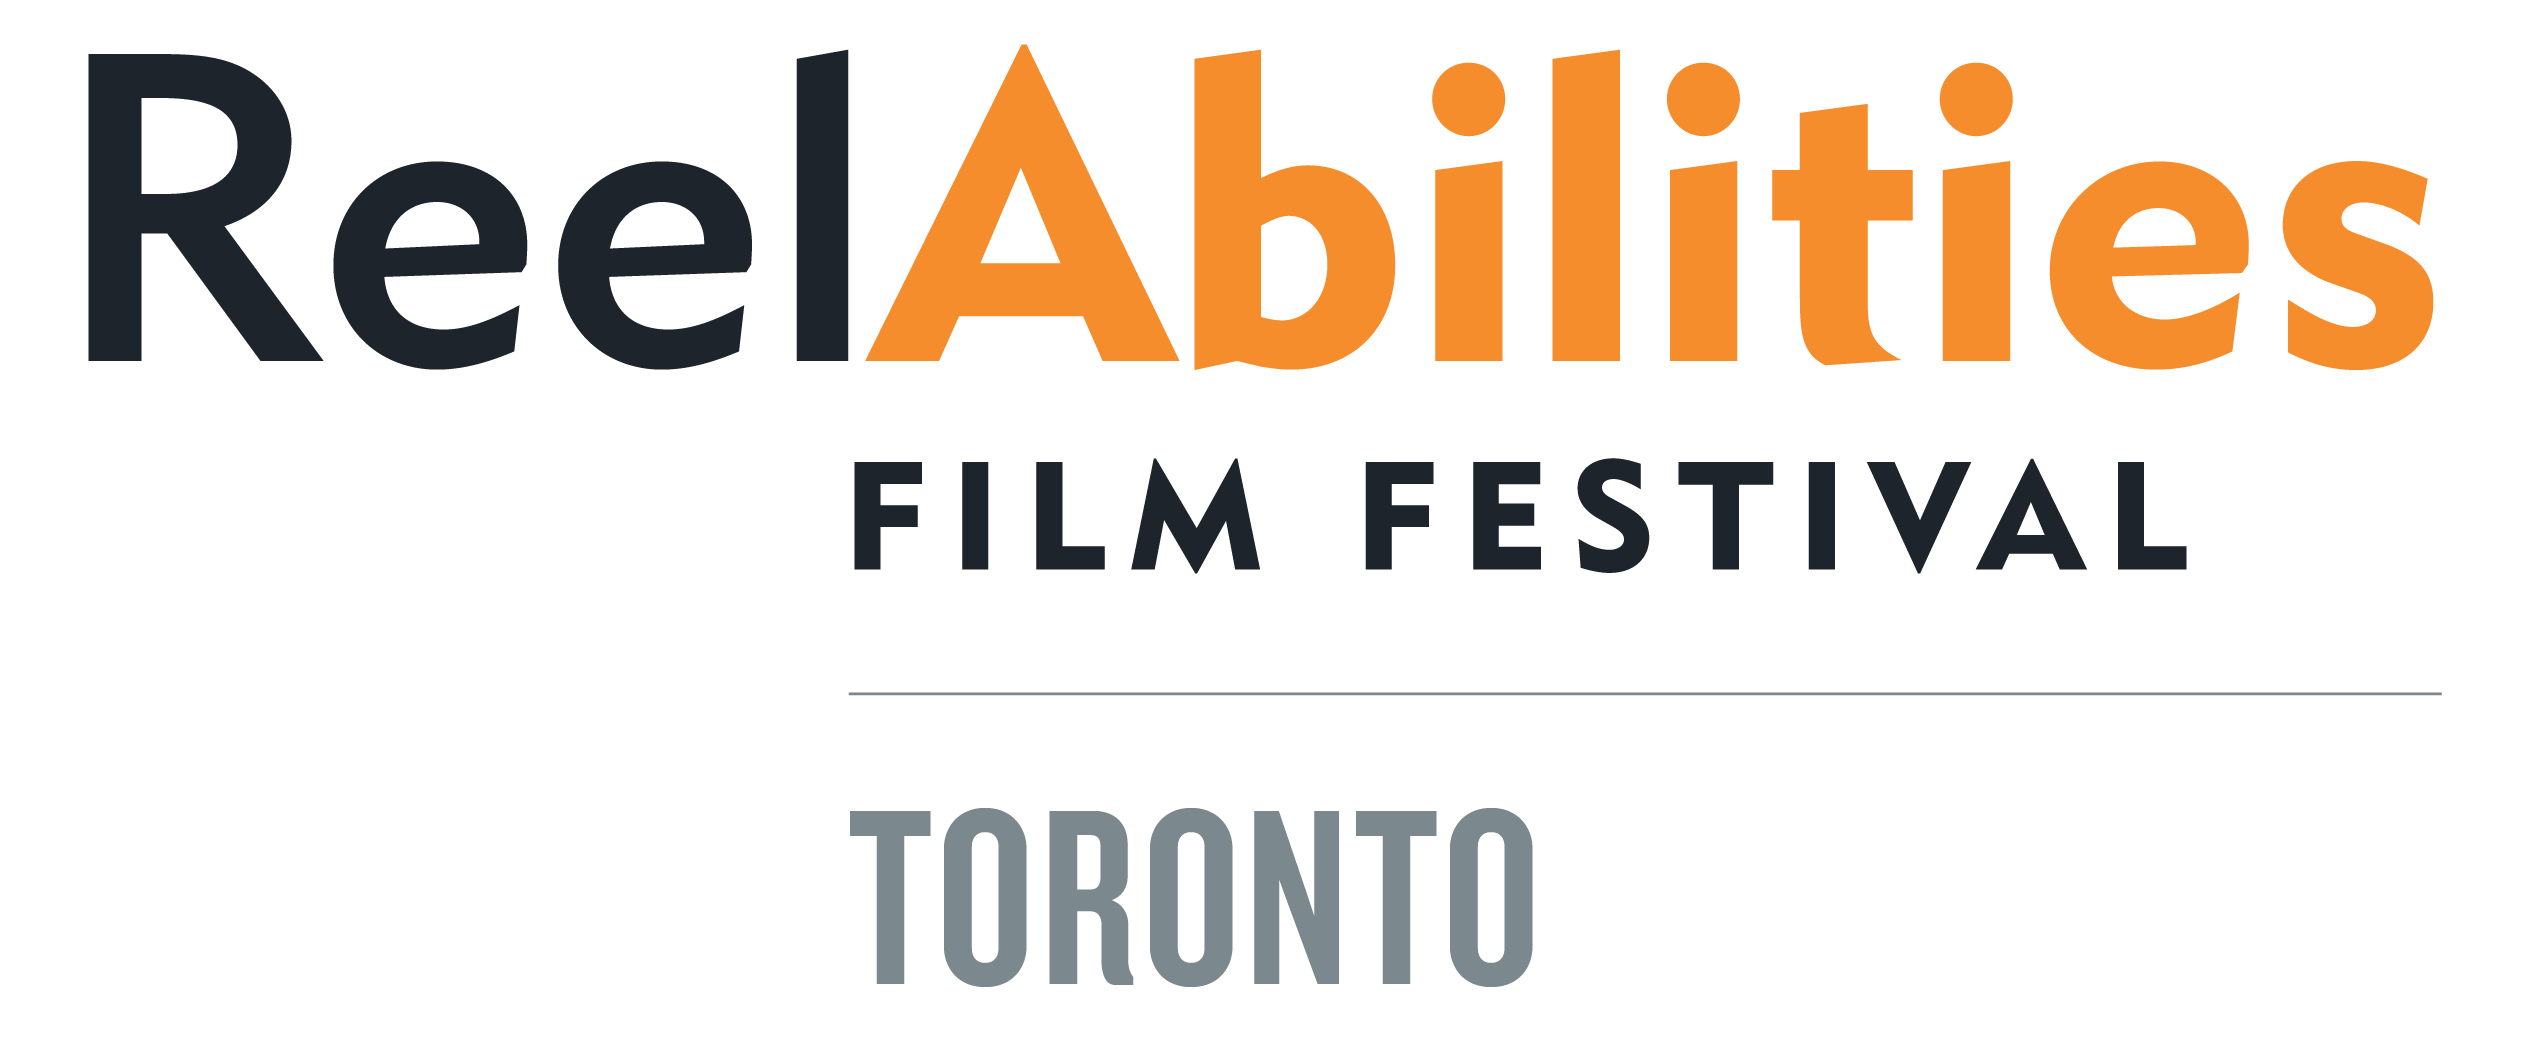 ReelAbilities Film Festival Toronto logo